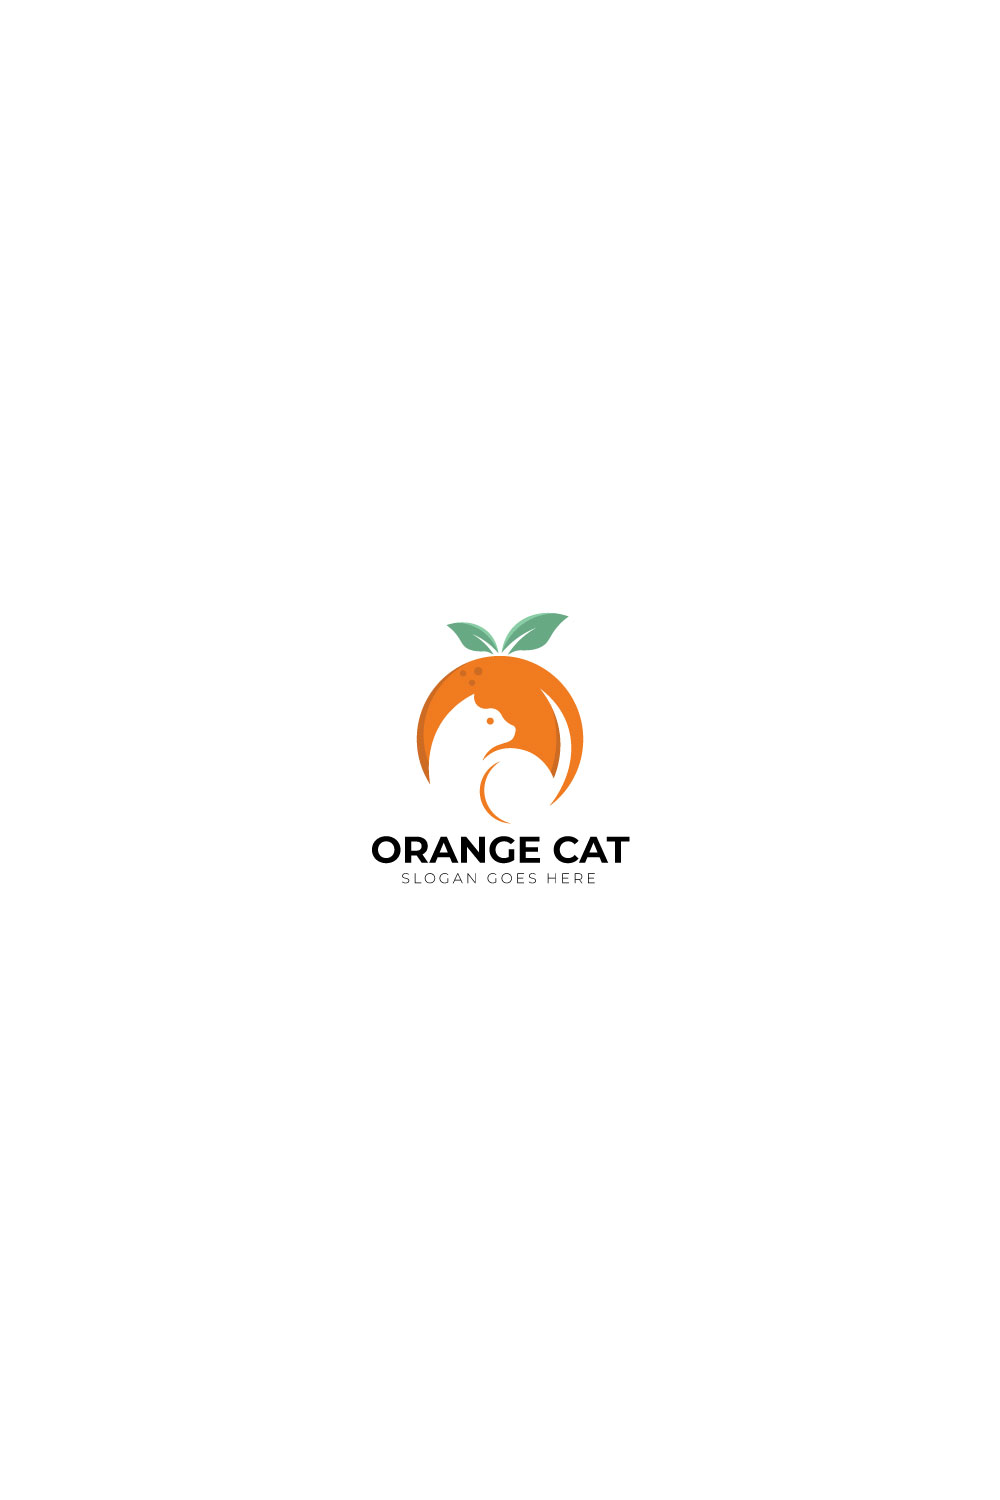 Orange cat logo design pinterest preview image.